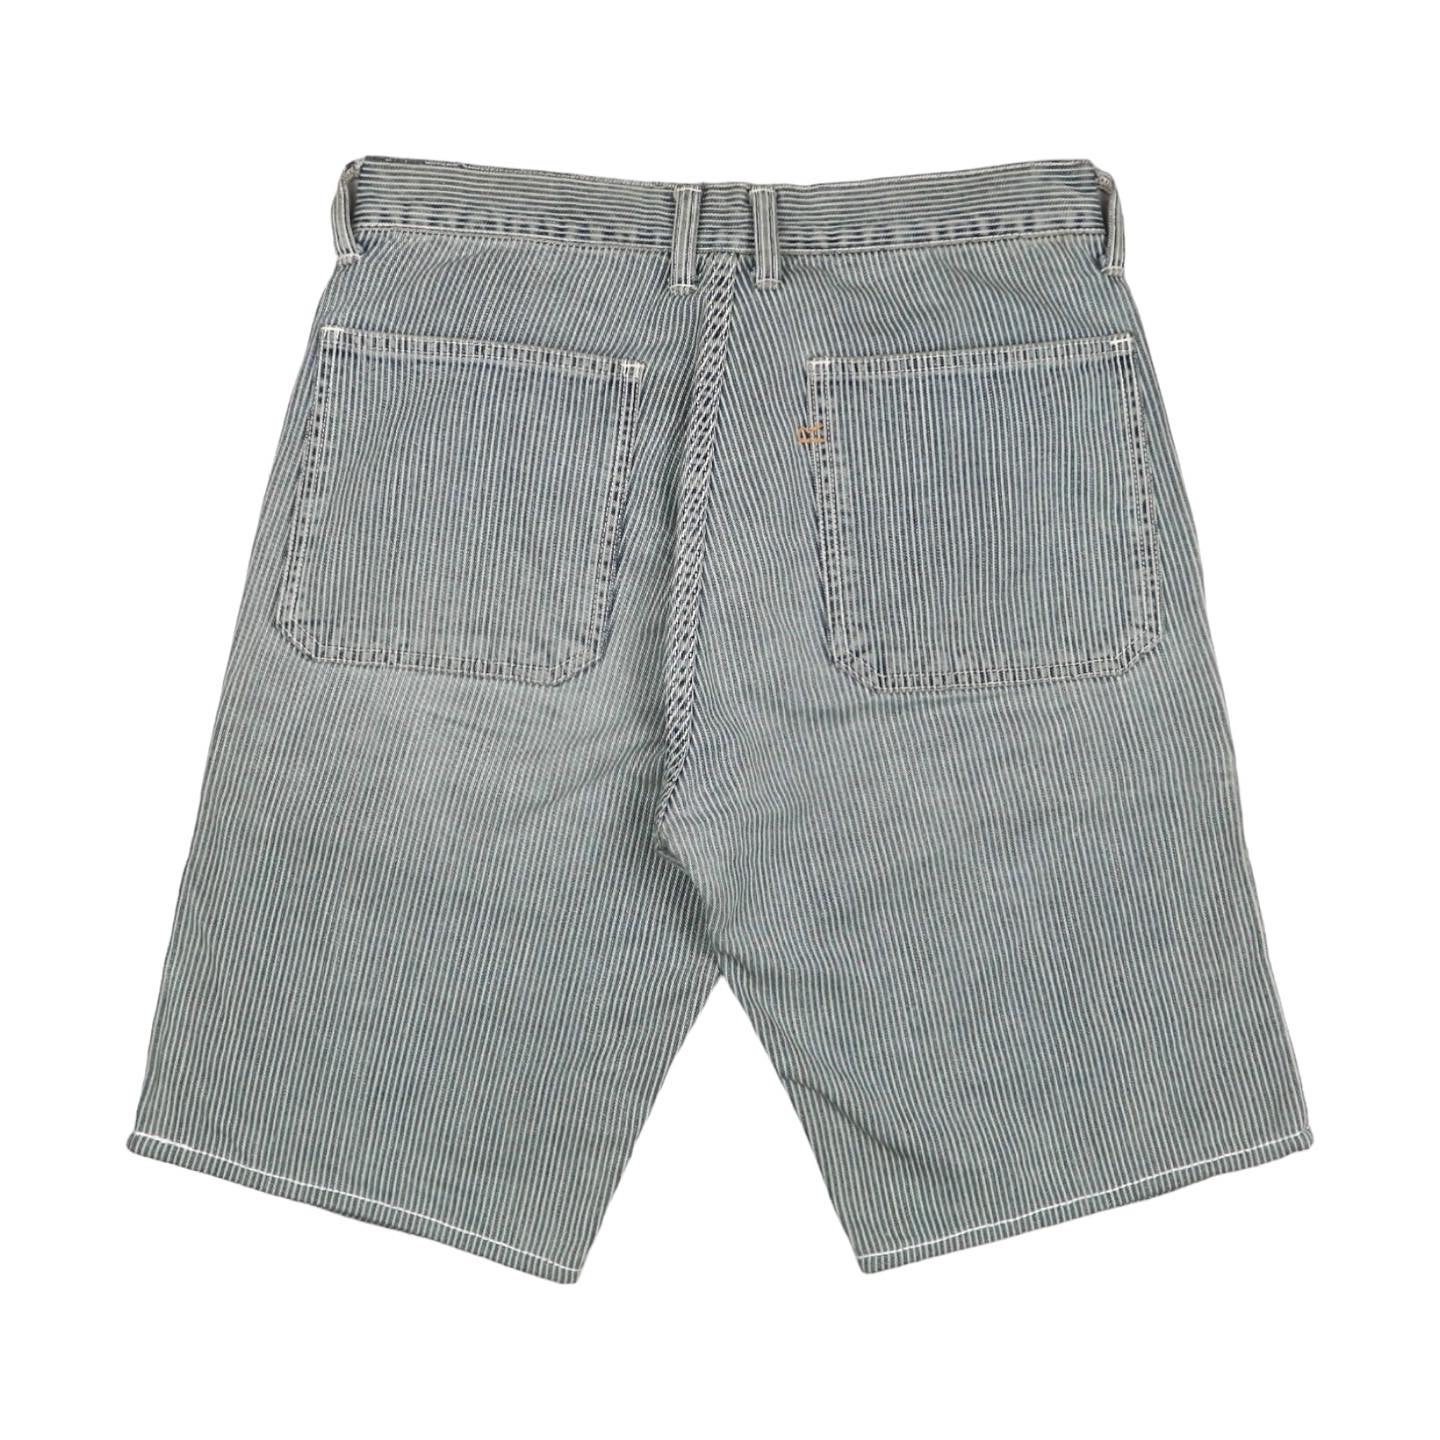 45rpm Japan Stripe Indigo Shorts Size 29